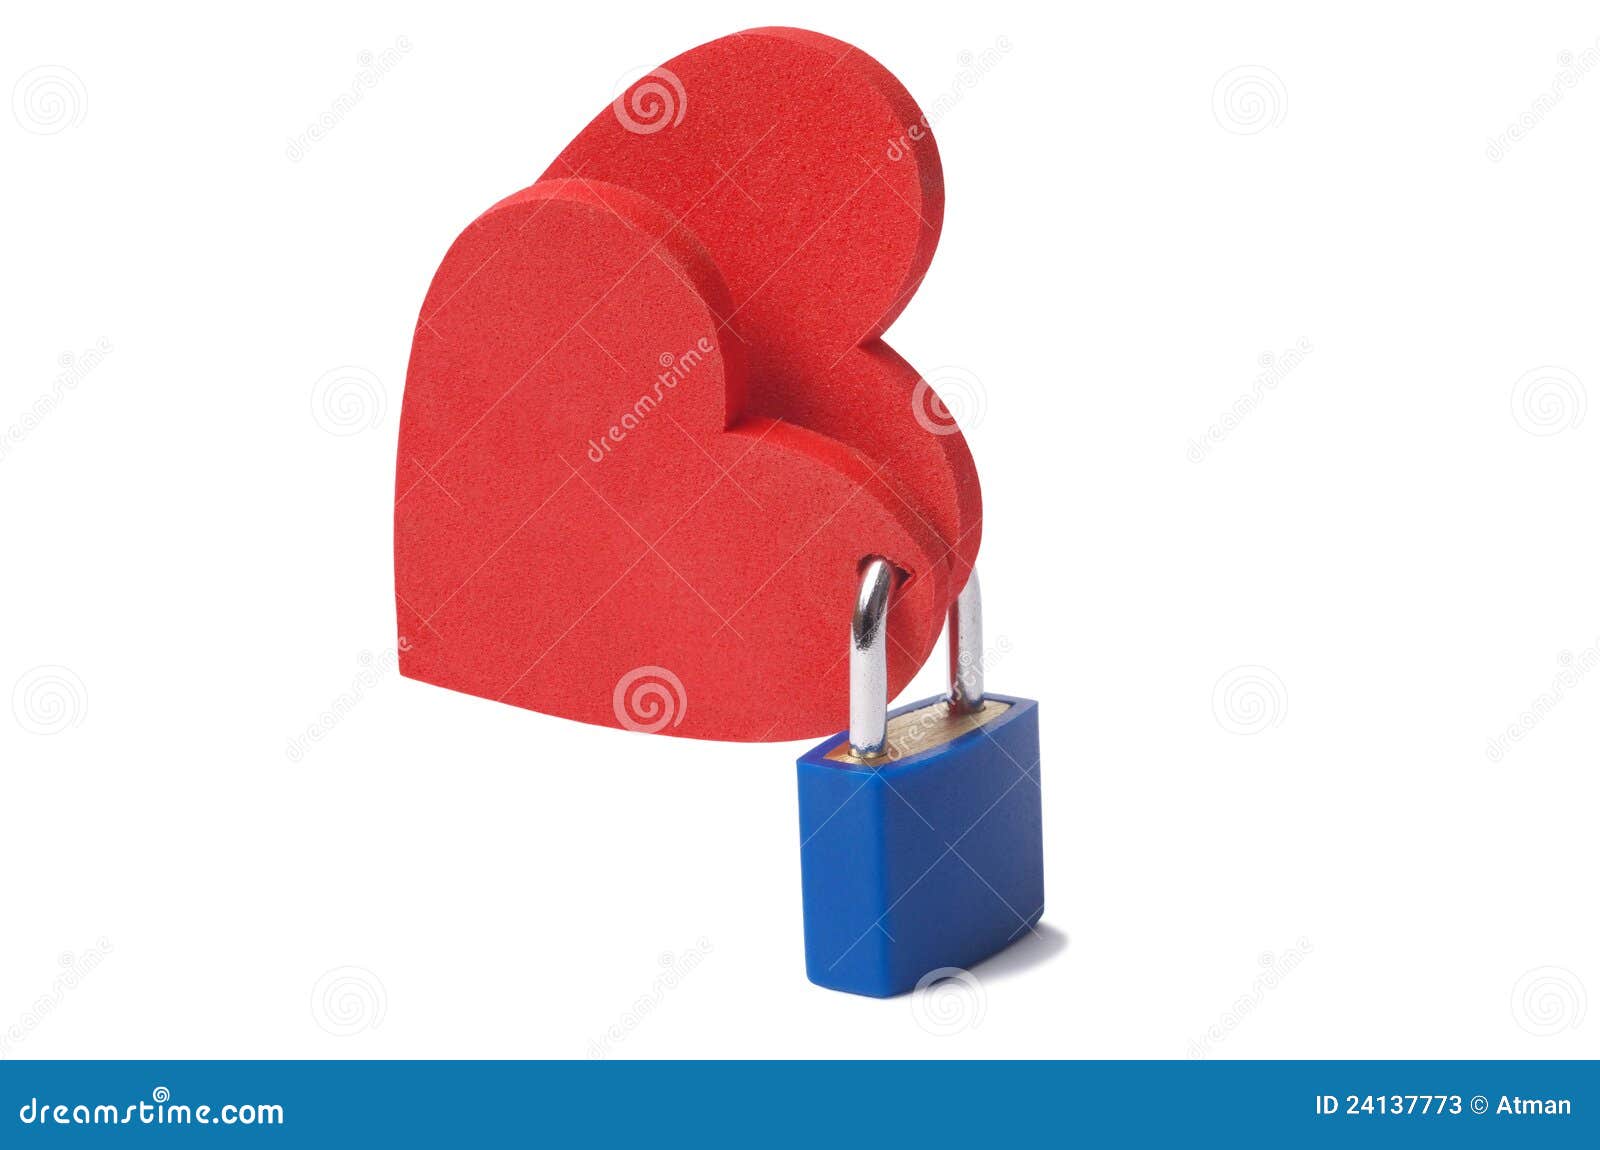 900+ Free Love Lock & Love Images - Pixabay